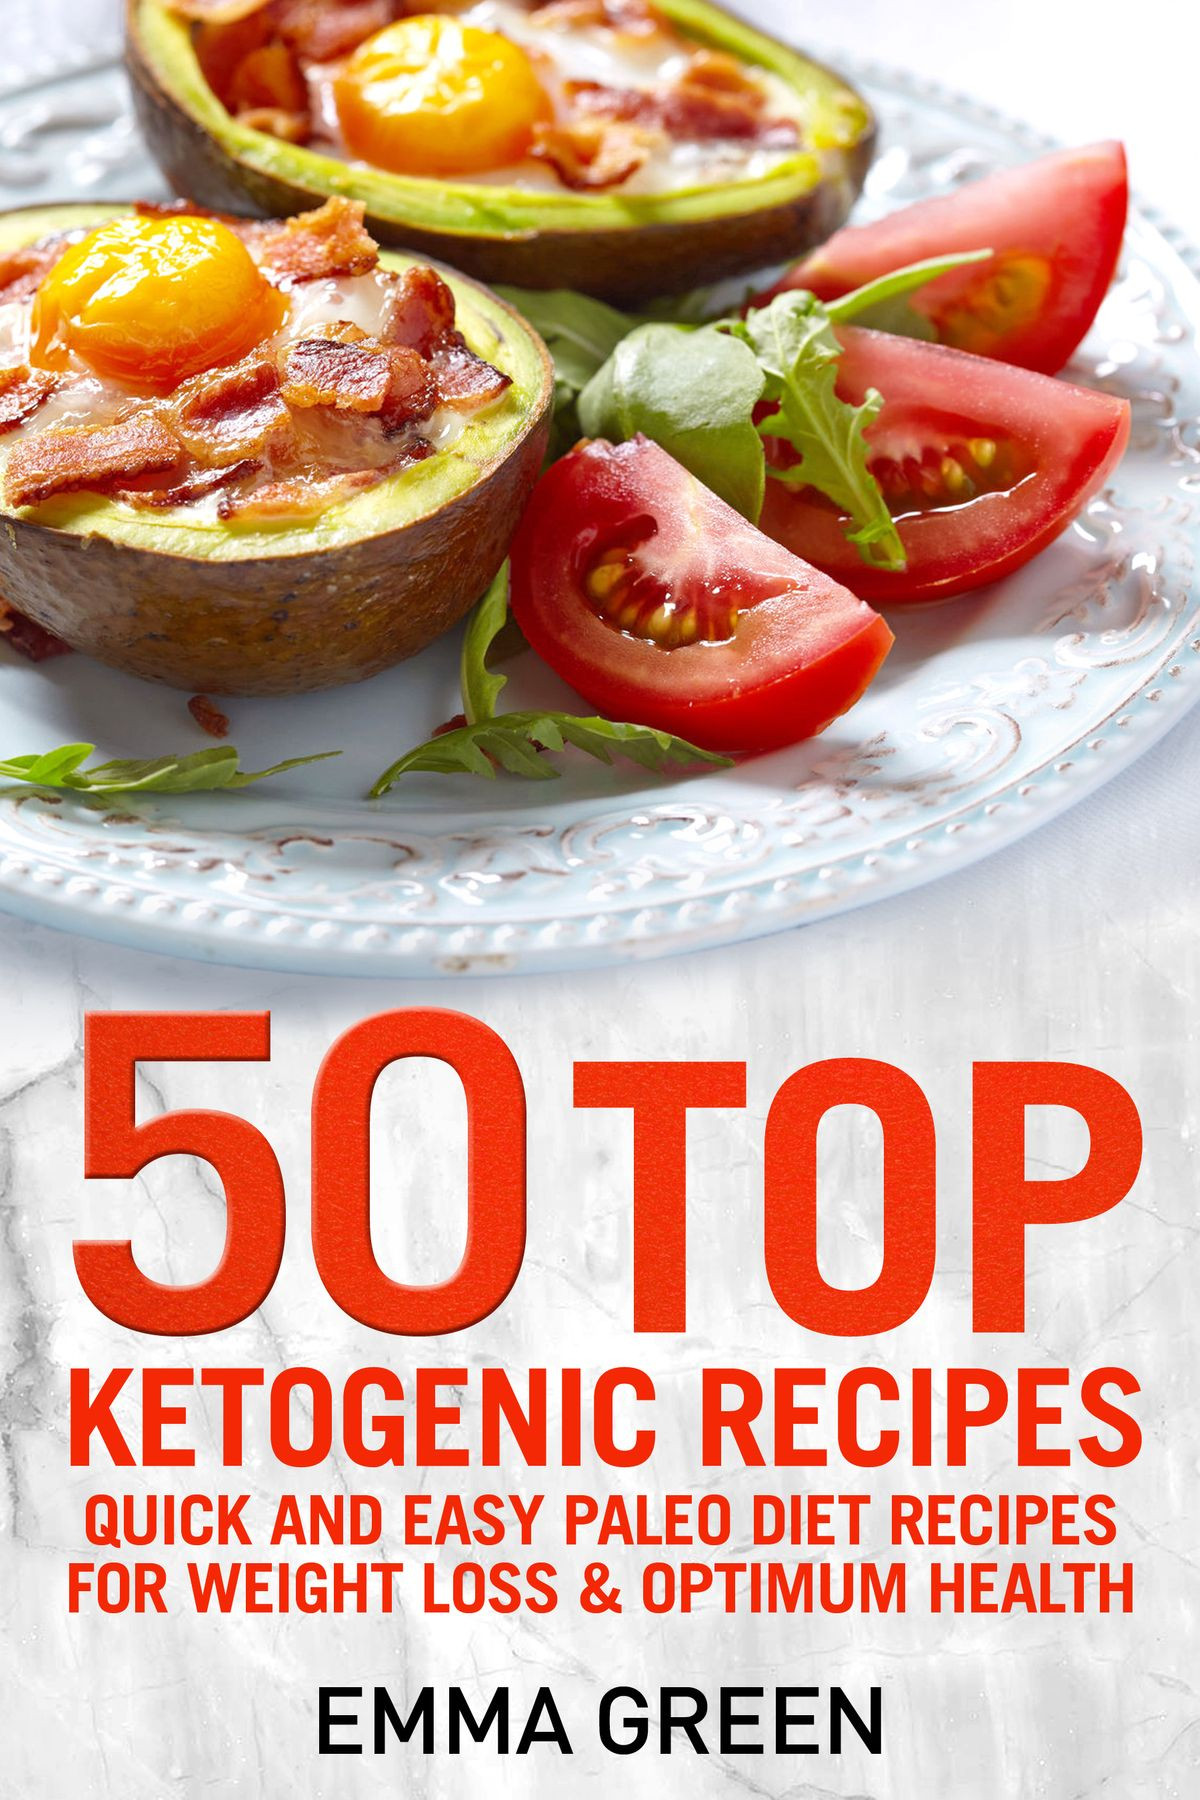 Keto Diet Recipes Losing Weight Breakfast
 50 Top Ketogenic Recipes Quick and Easy Keto Diet Recipes